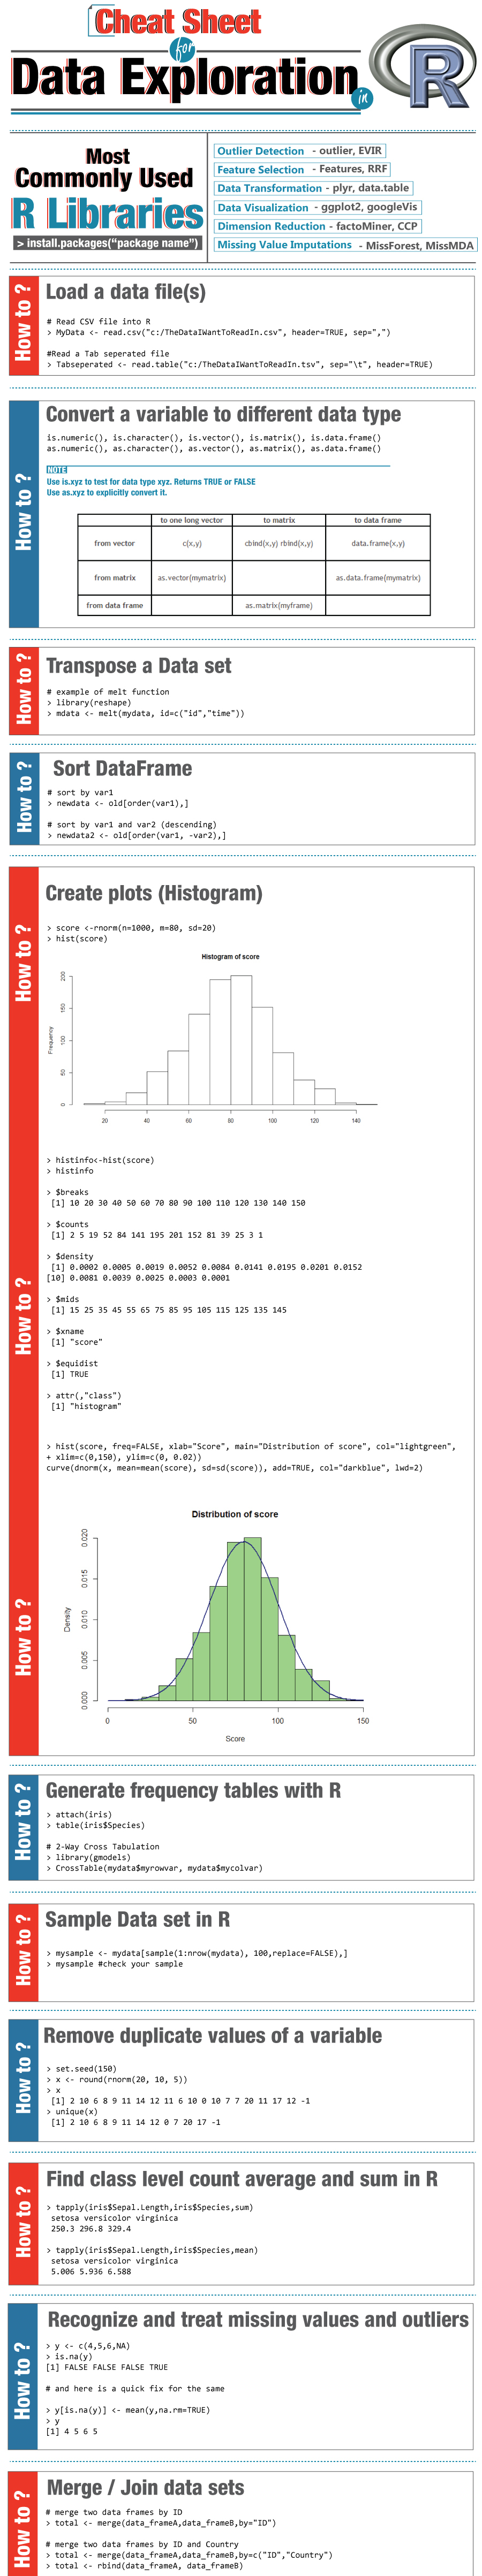 Data analysis cheat sheet pdf